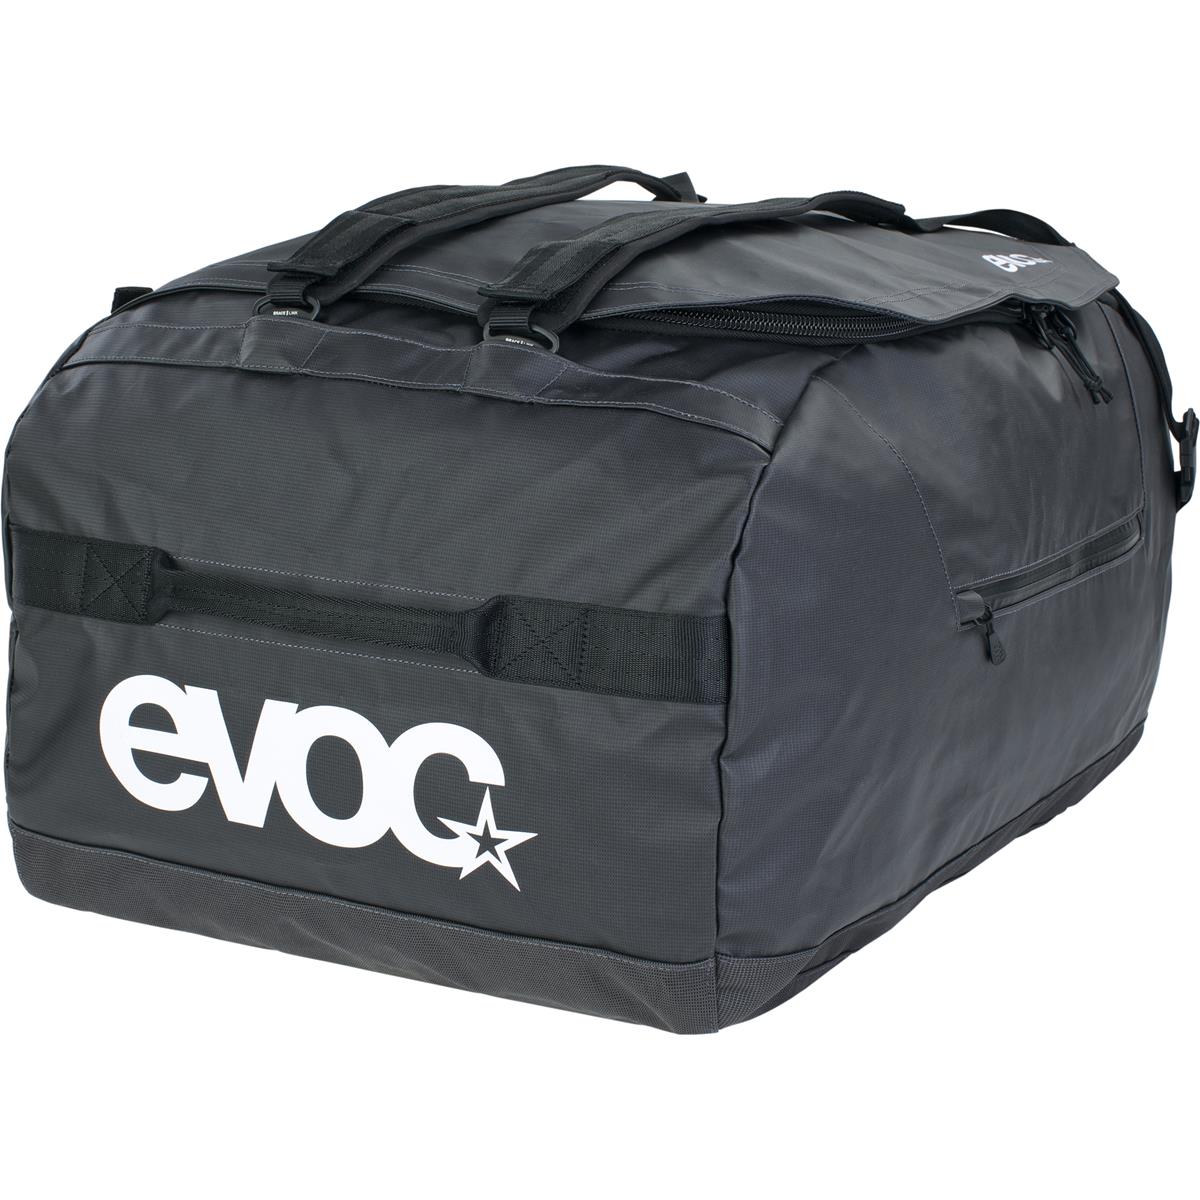 Evoc Reisetasche Duffel Bag 100 Carbon Grau/Schwarz